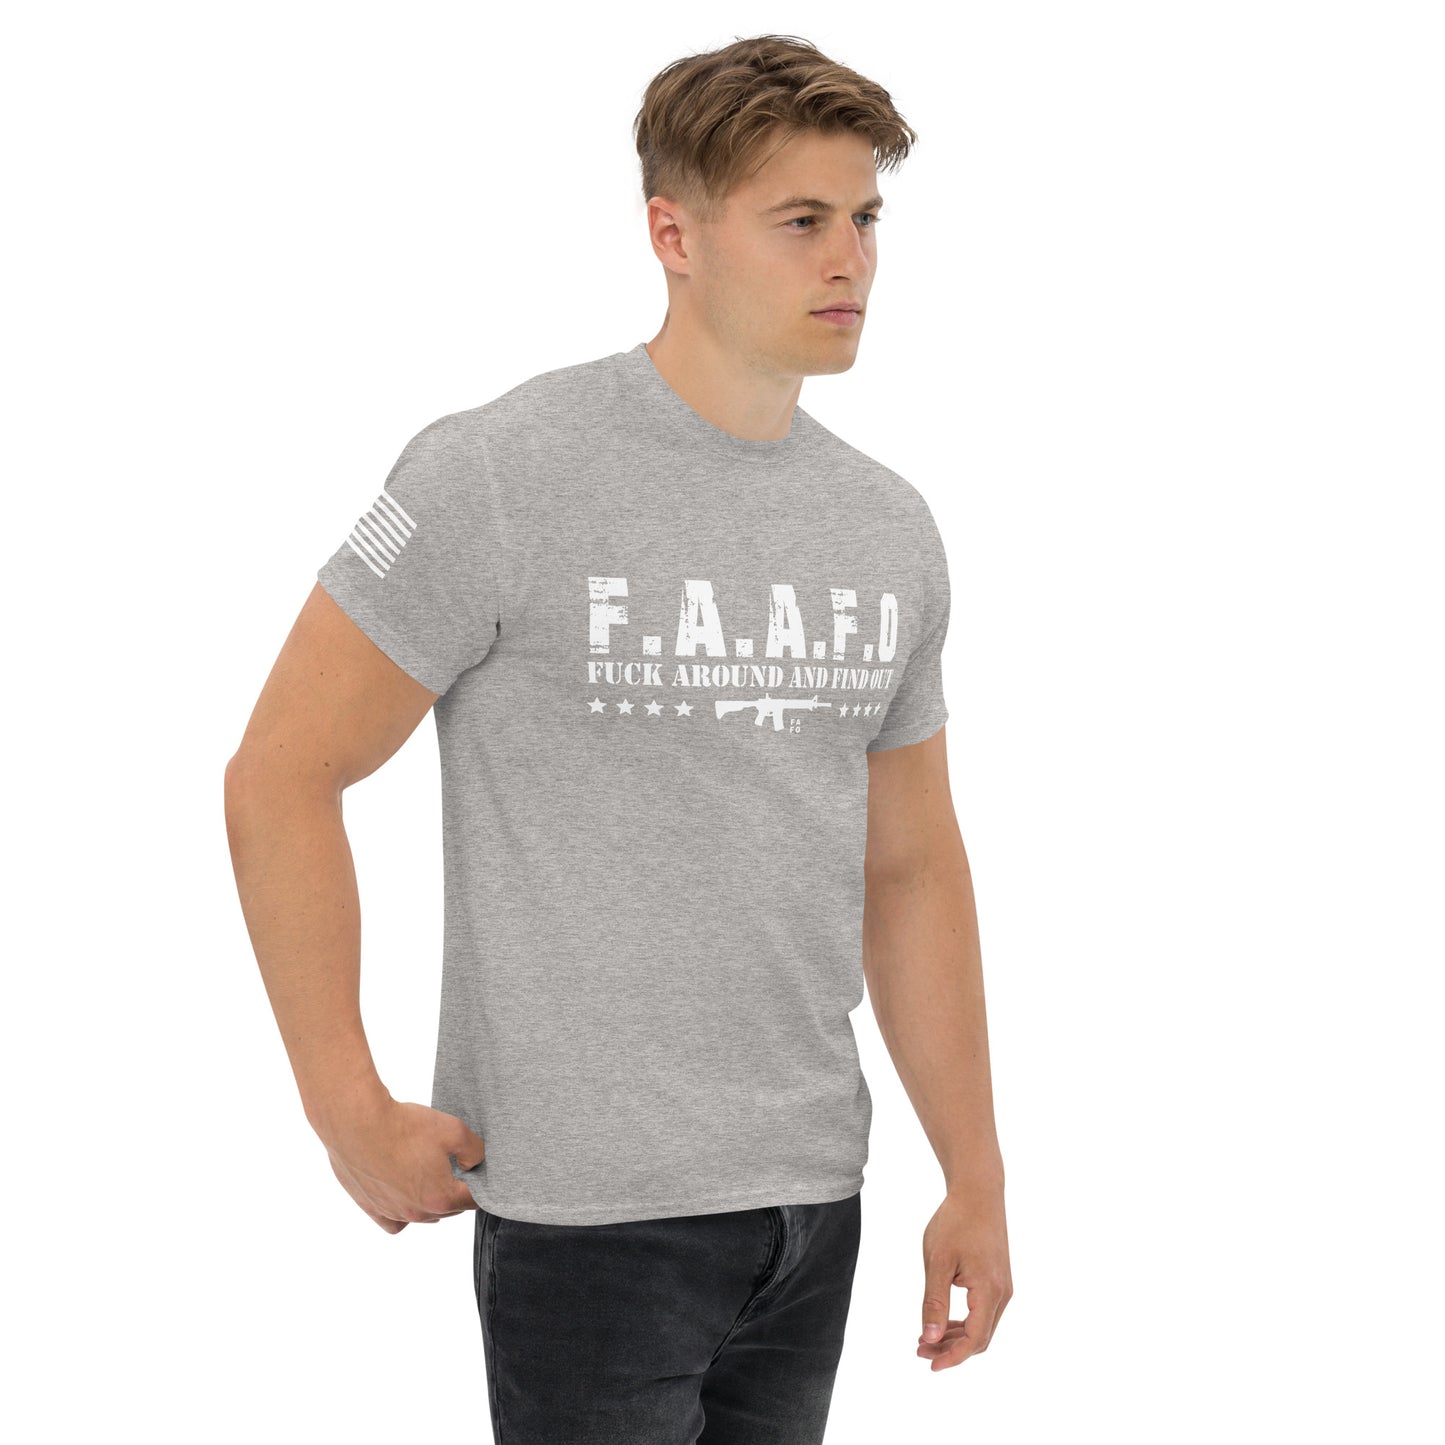 Men's Gildan Cotton Tee - FAAFO - FAFO Sportswear